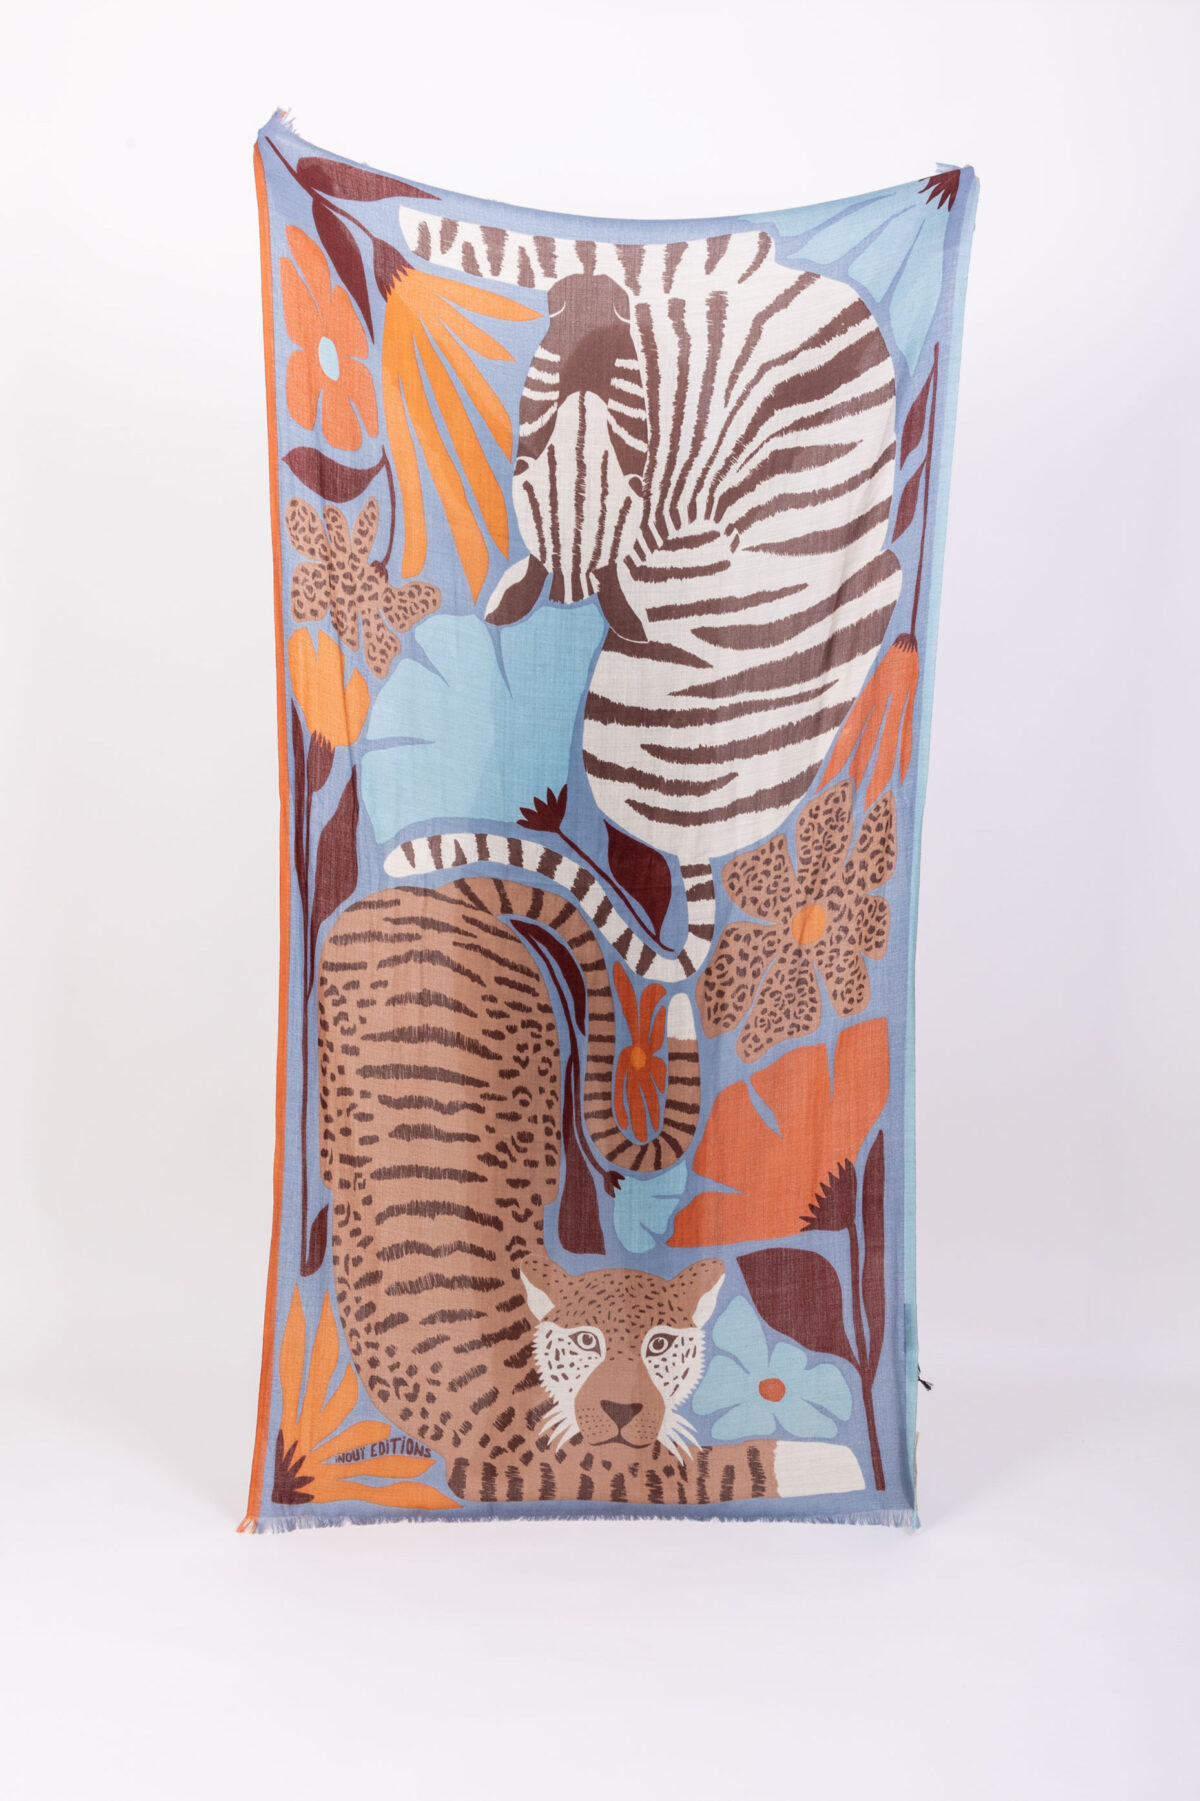 folk-blue-scarf-wool-tiger-zebra-flowers-inoui-editions-matchboxathens